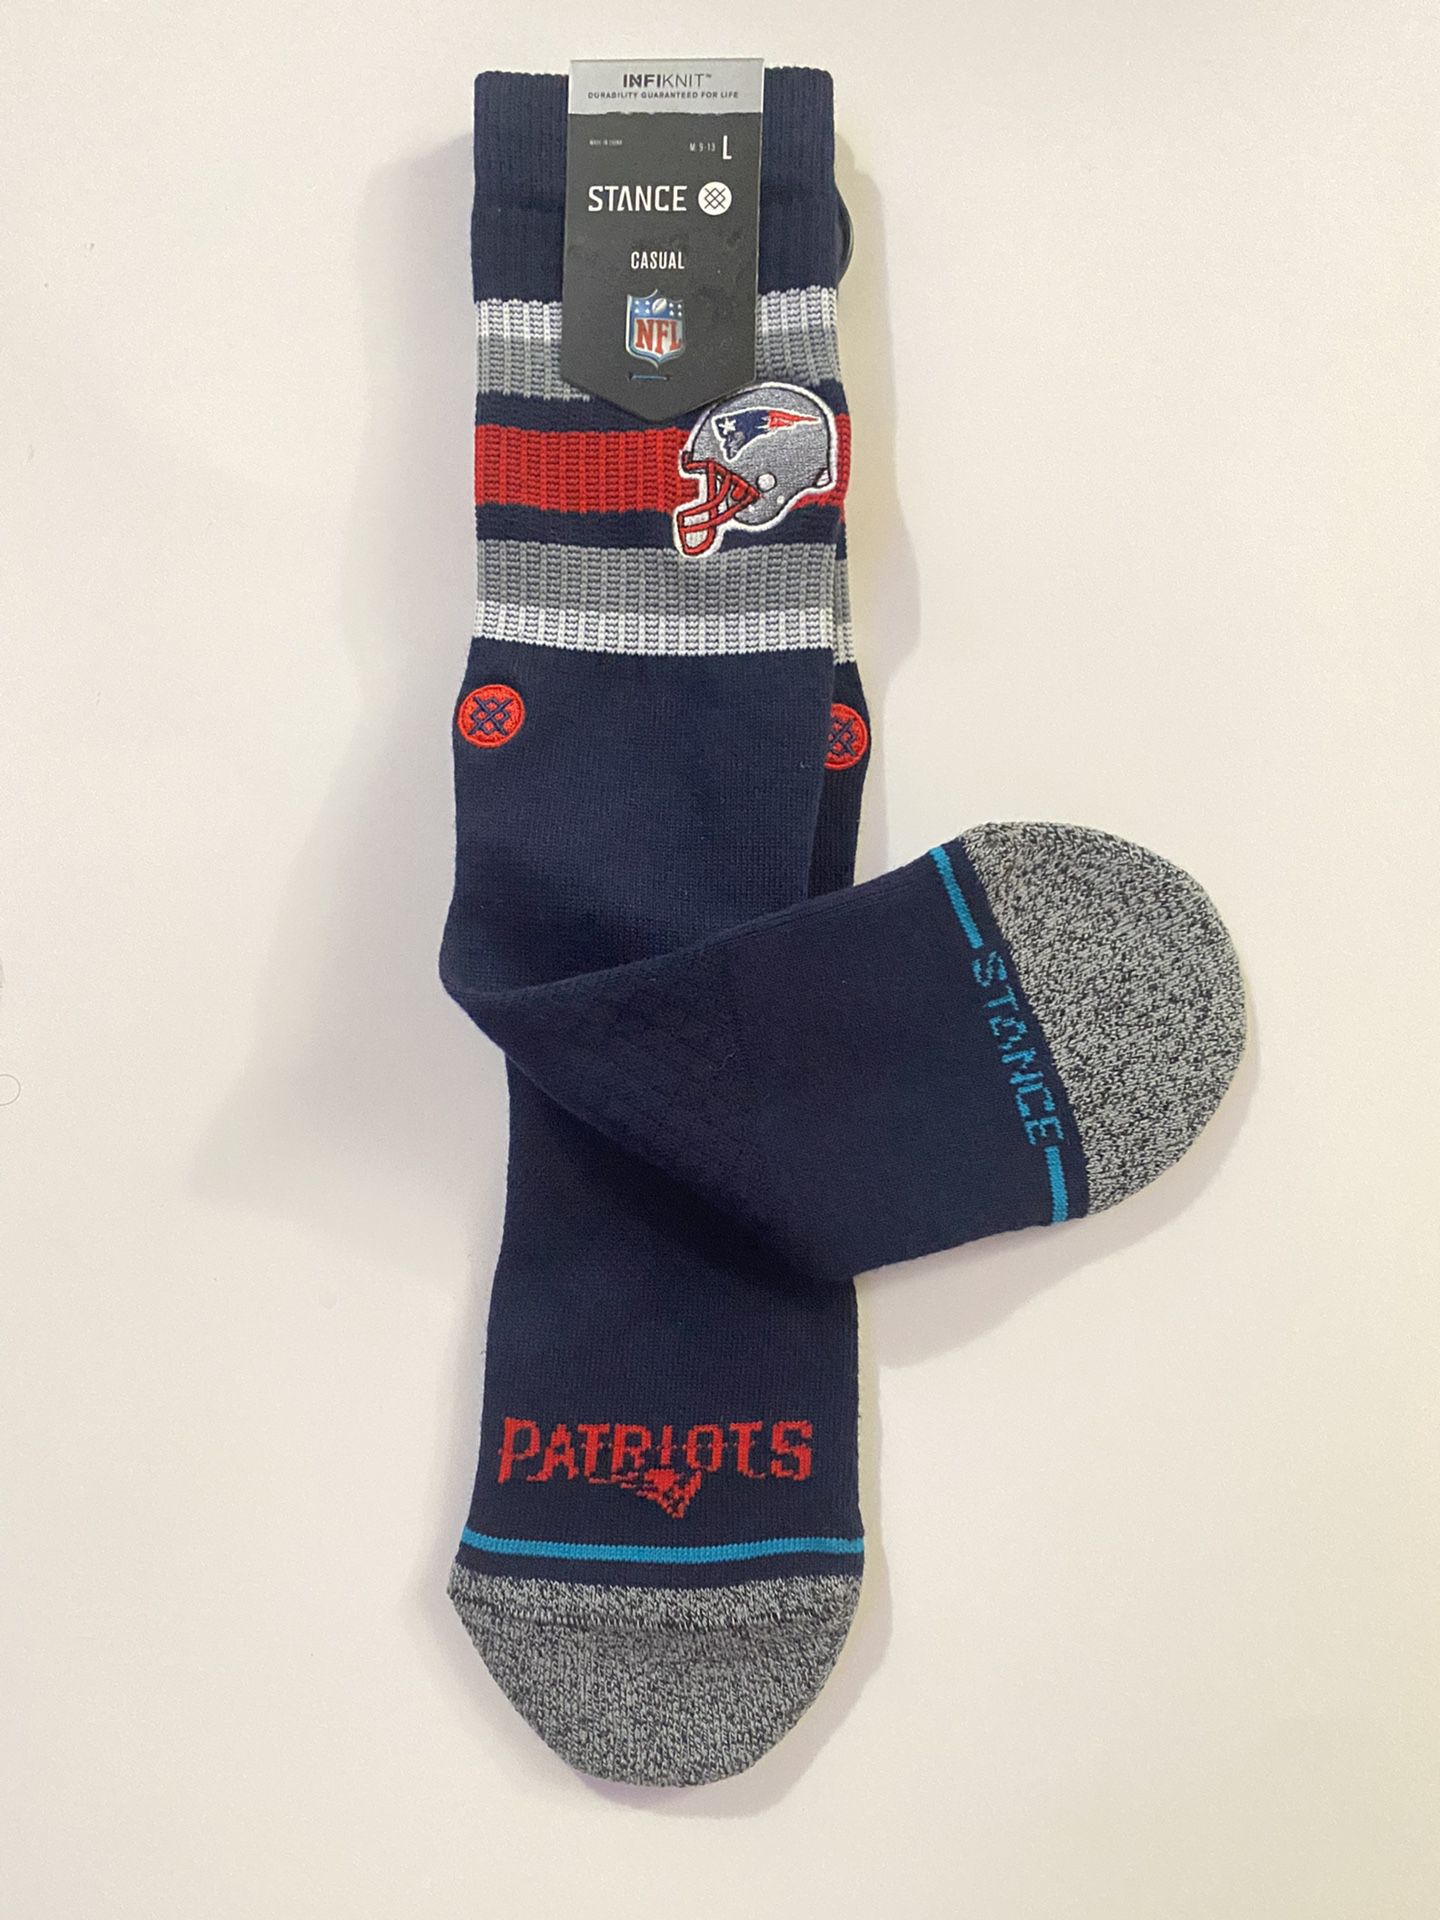 NFL Patriots Stance Socks 